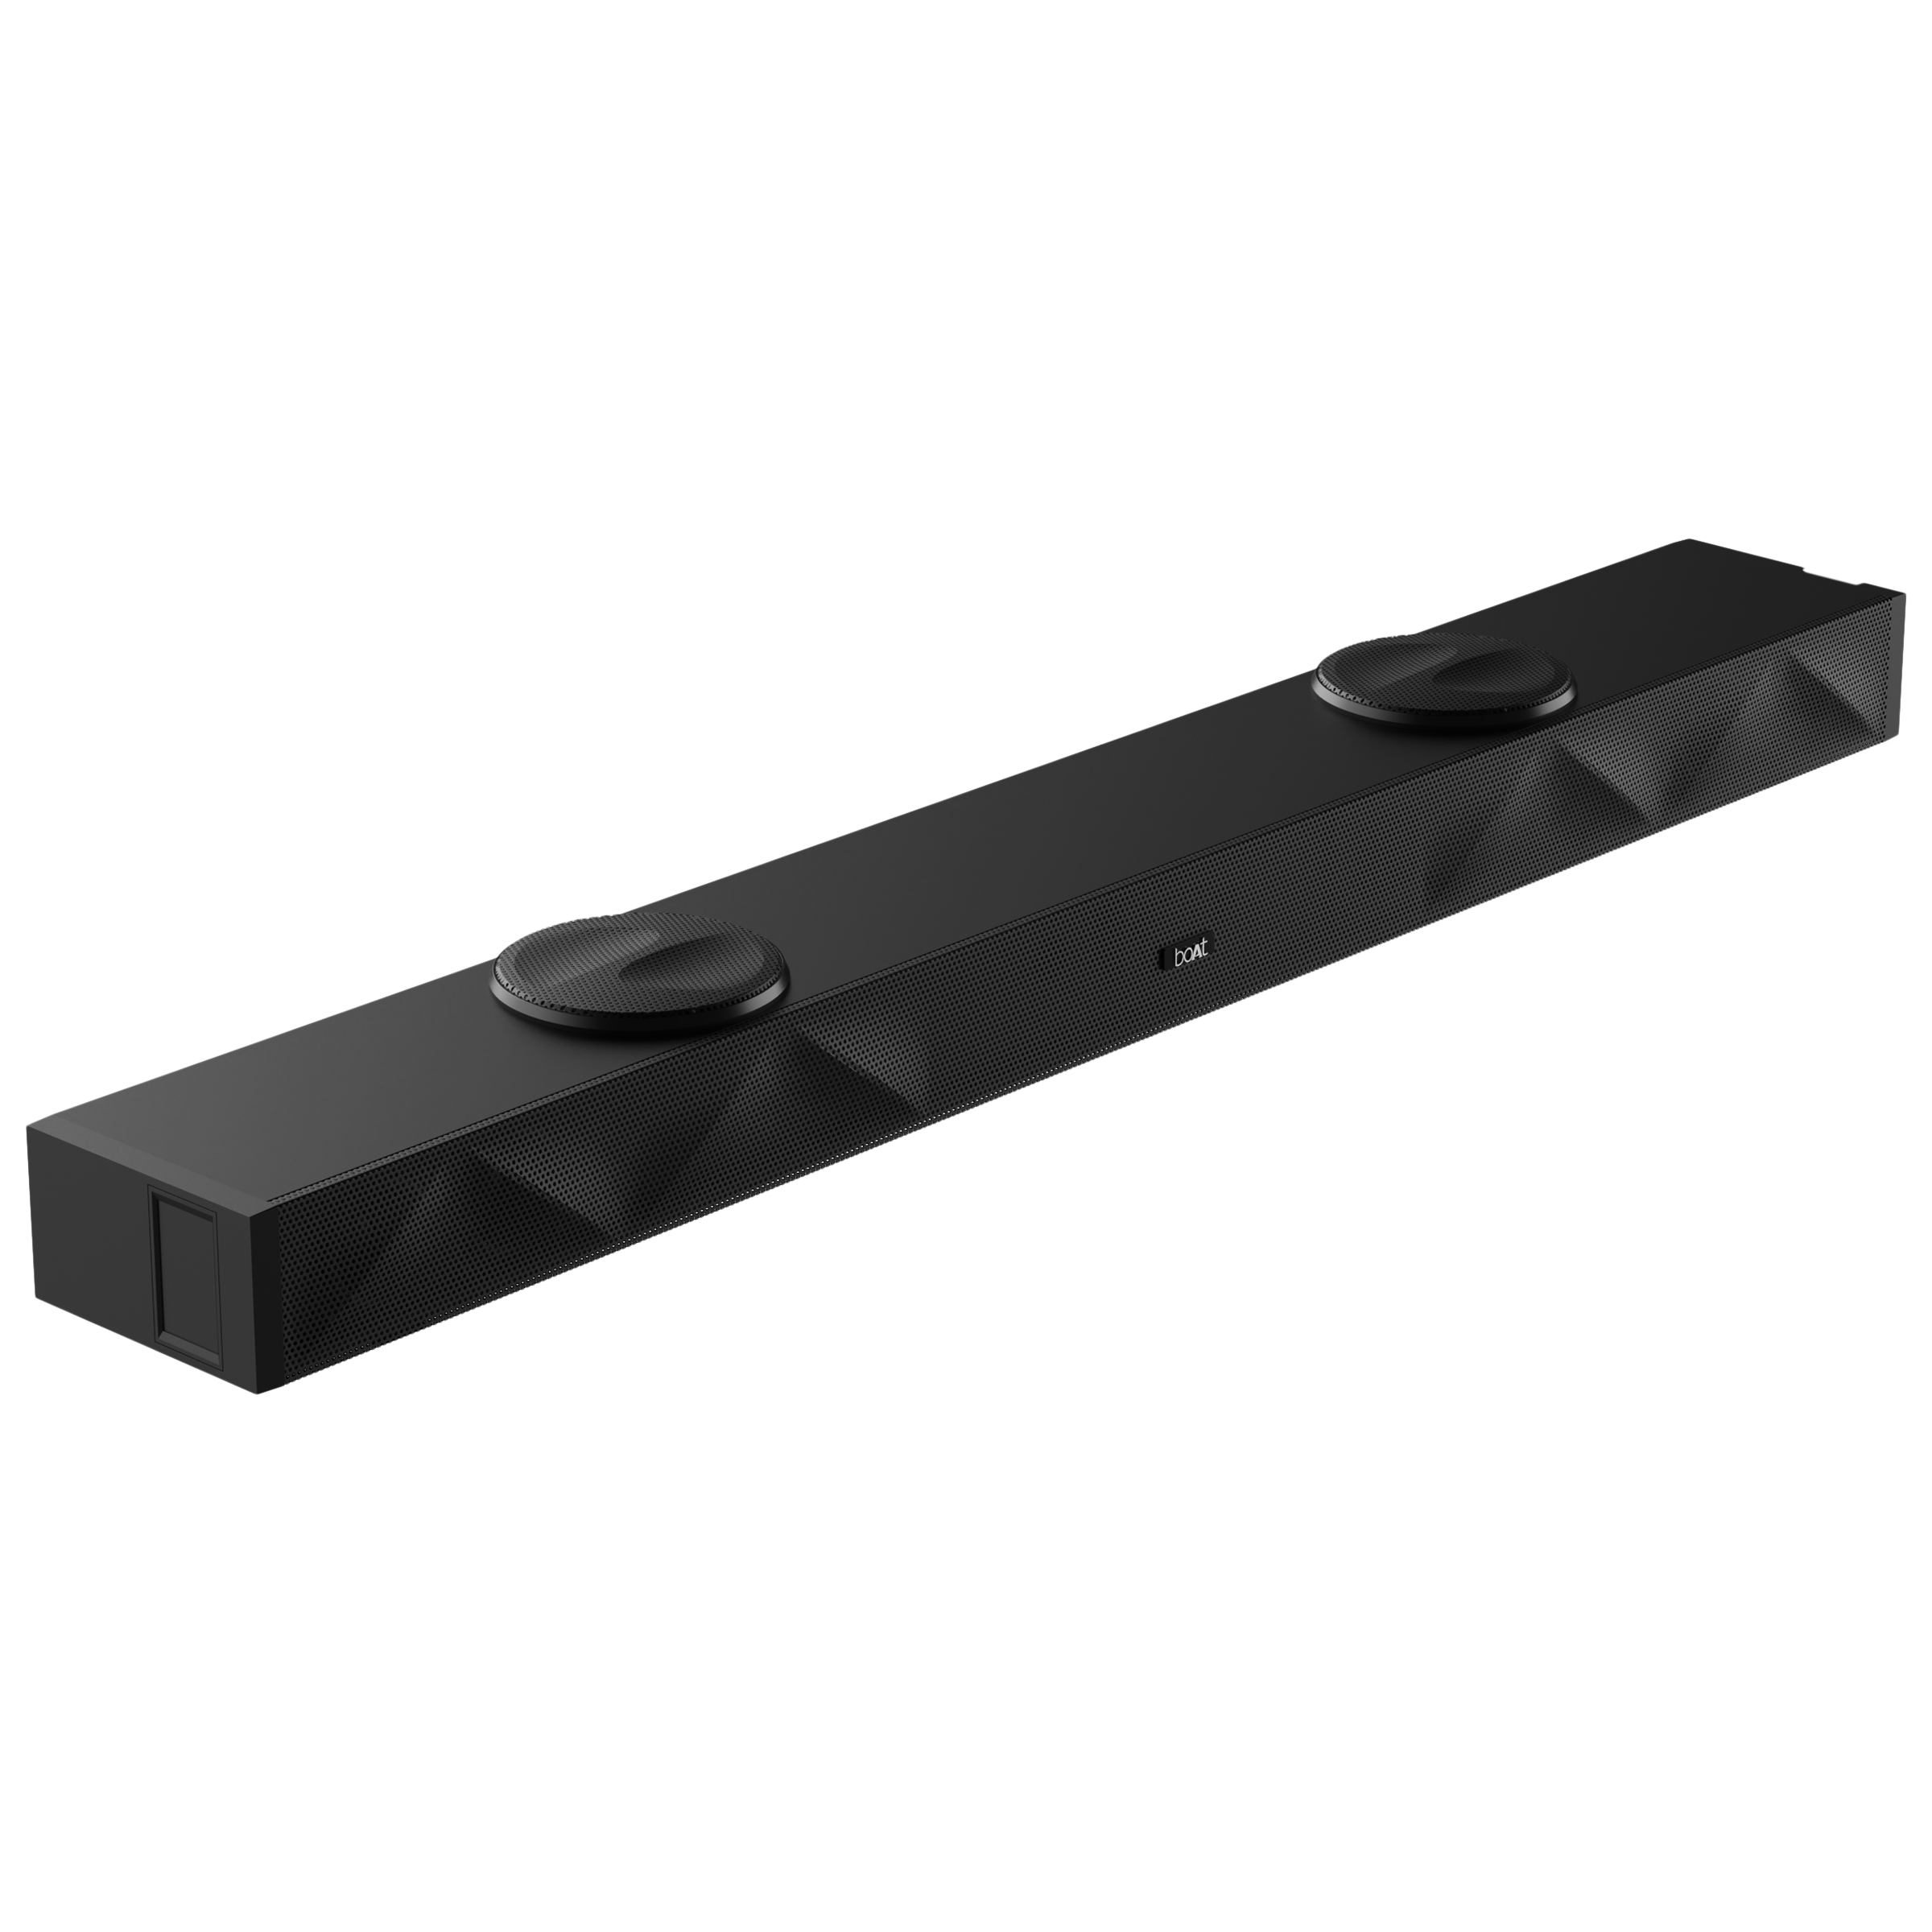 For 3806/-(76% Off) boAt Aavante Bar Raga 100W Bluetooth Soundbar with Remote (Surround Sound, 2.2 Channel, Pitch Black) at Croma